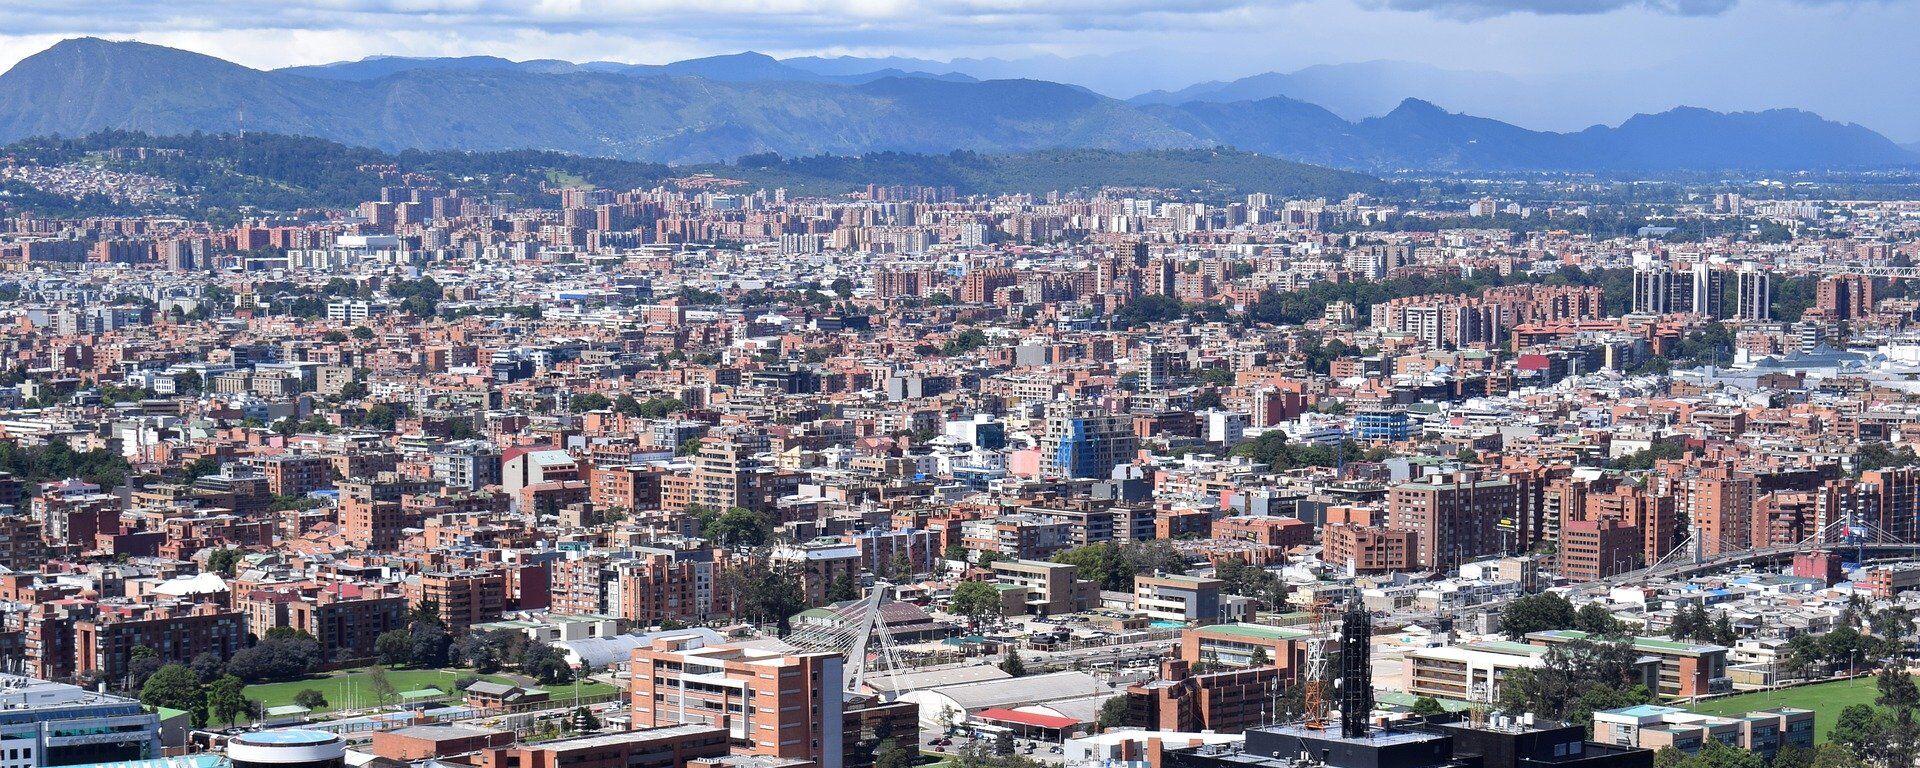 Bogotá, la capital de Colombia - Sputnik Mundo, 1920, 14.04.2021